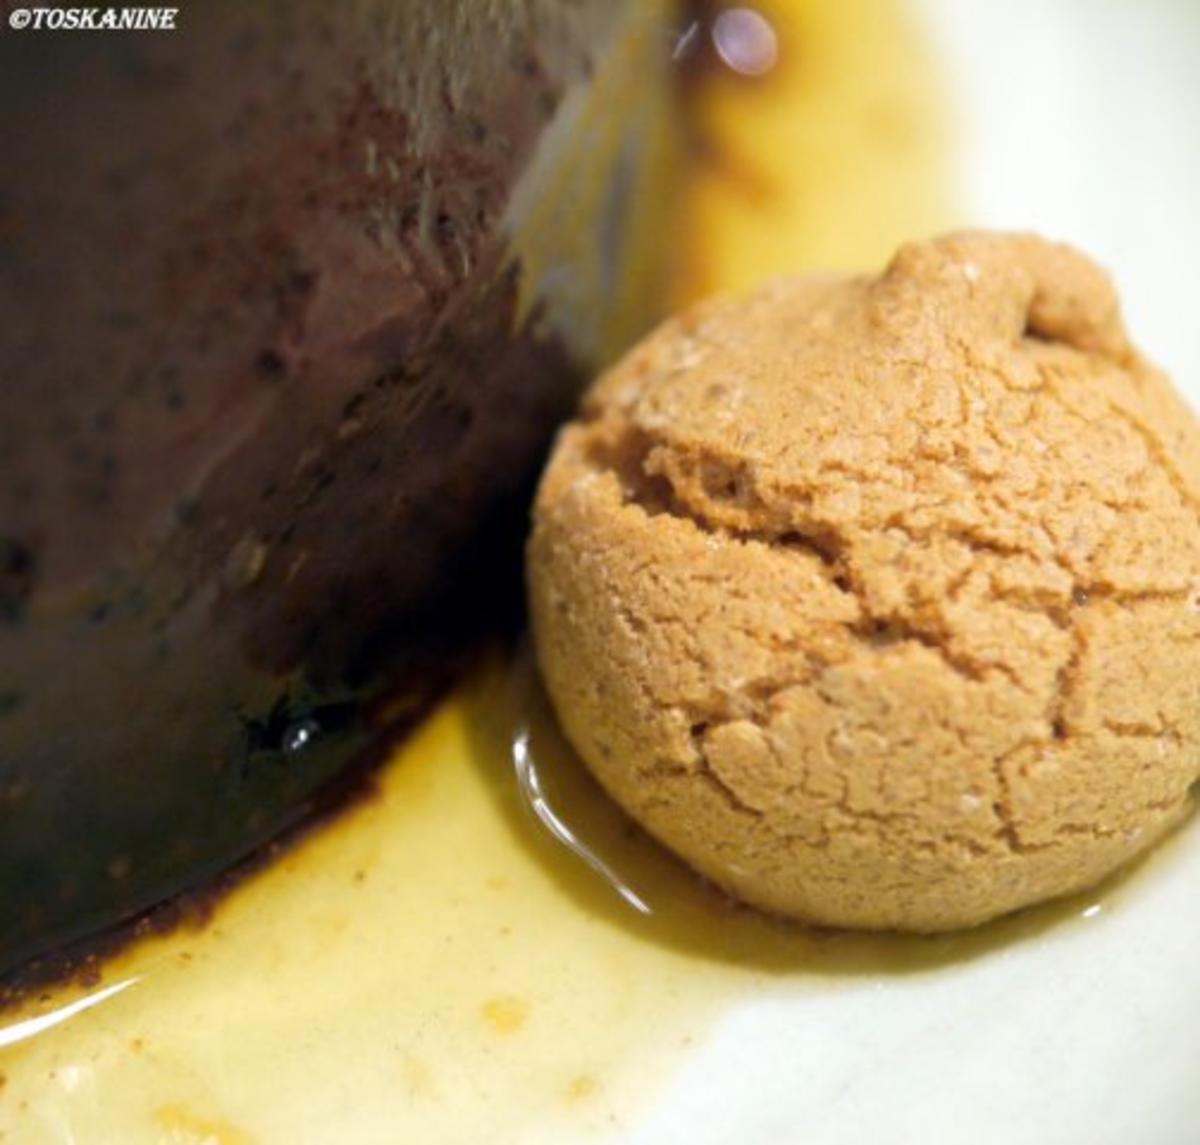 Bonet - piemontesischer Pudding - Rezept